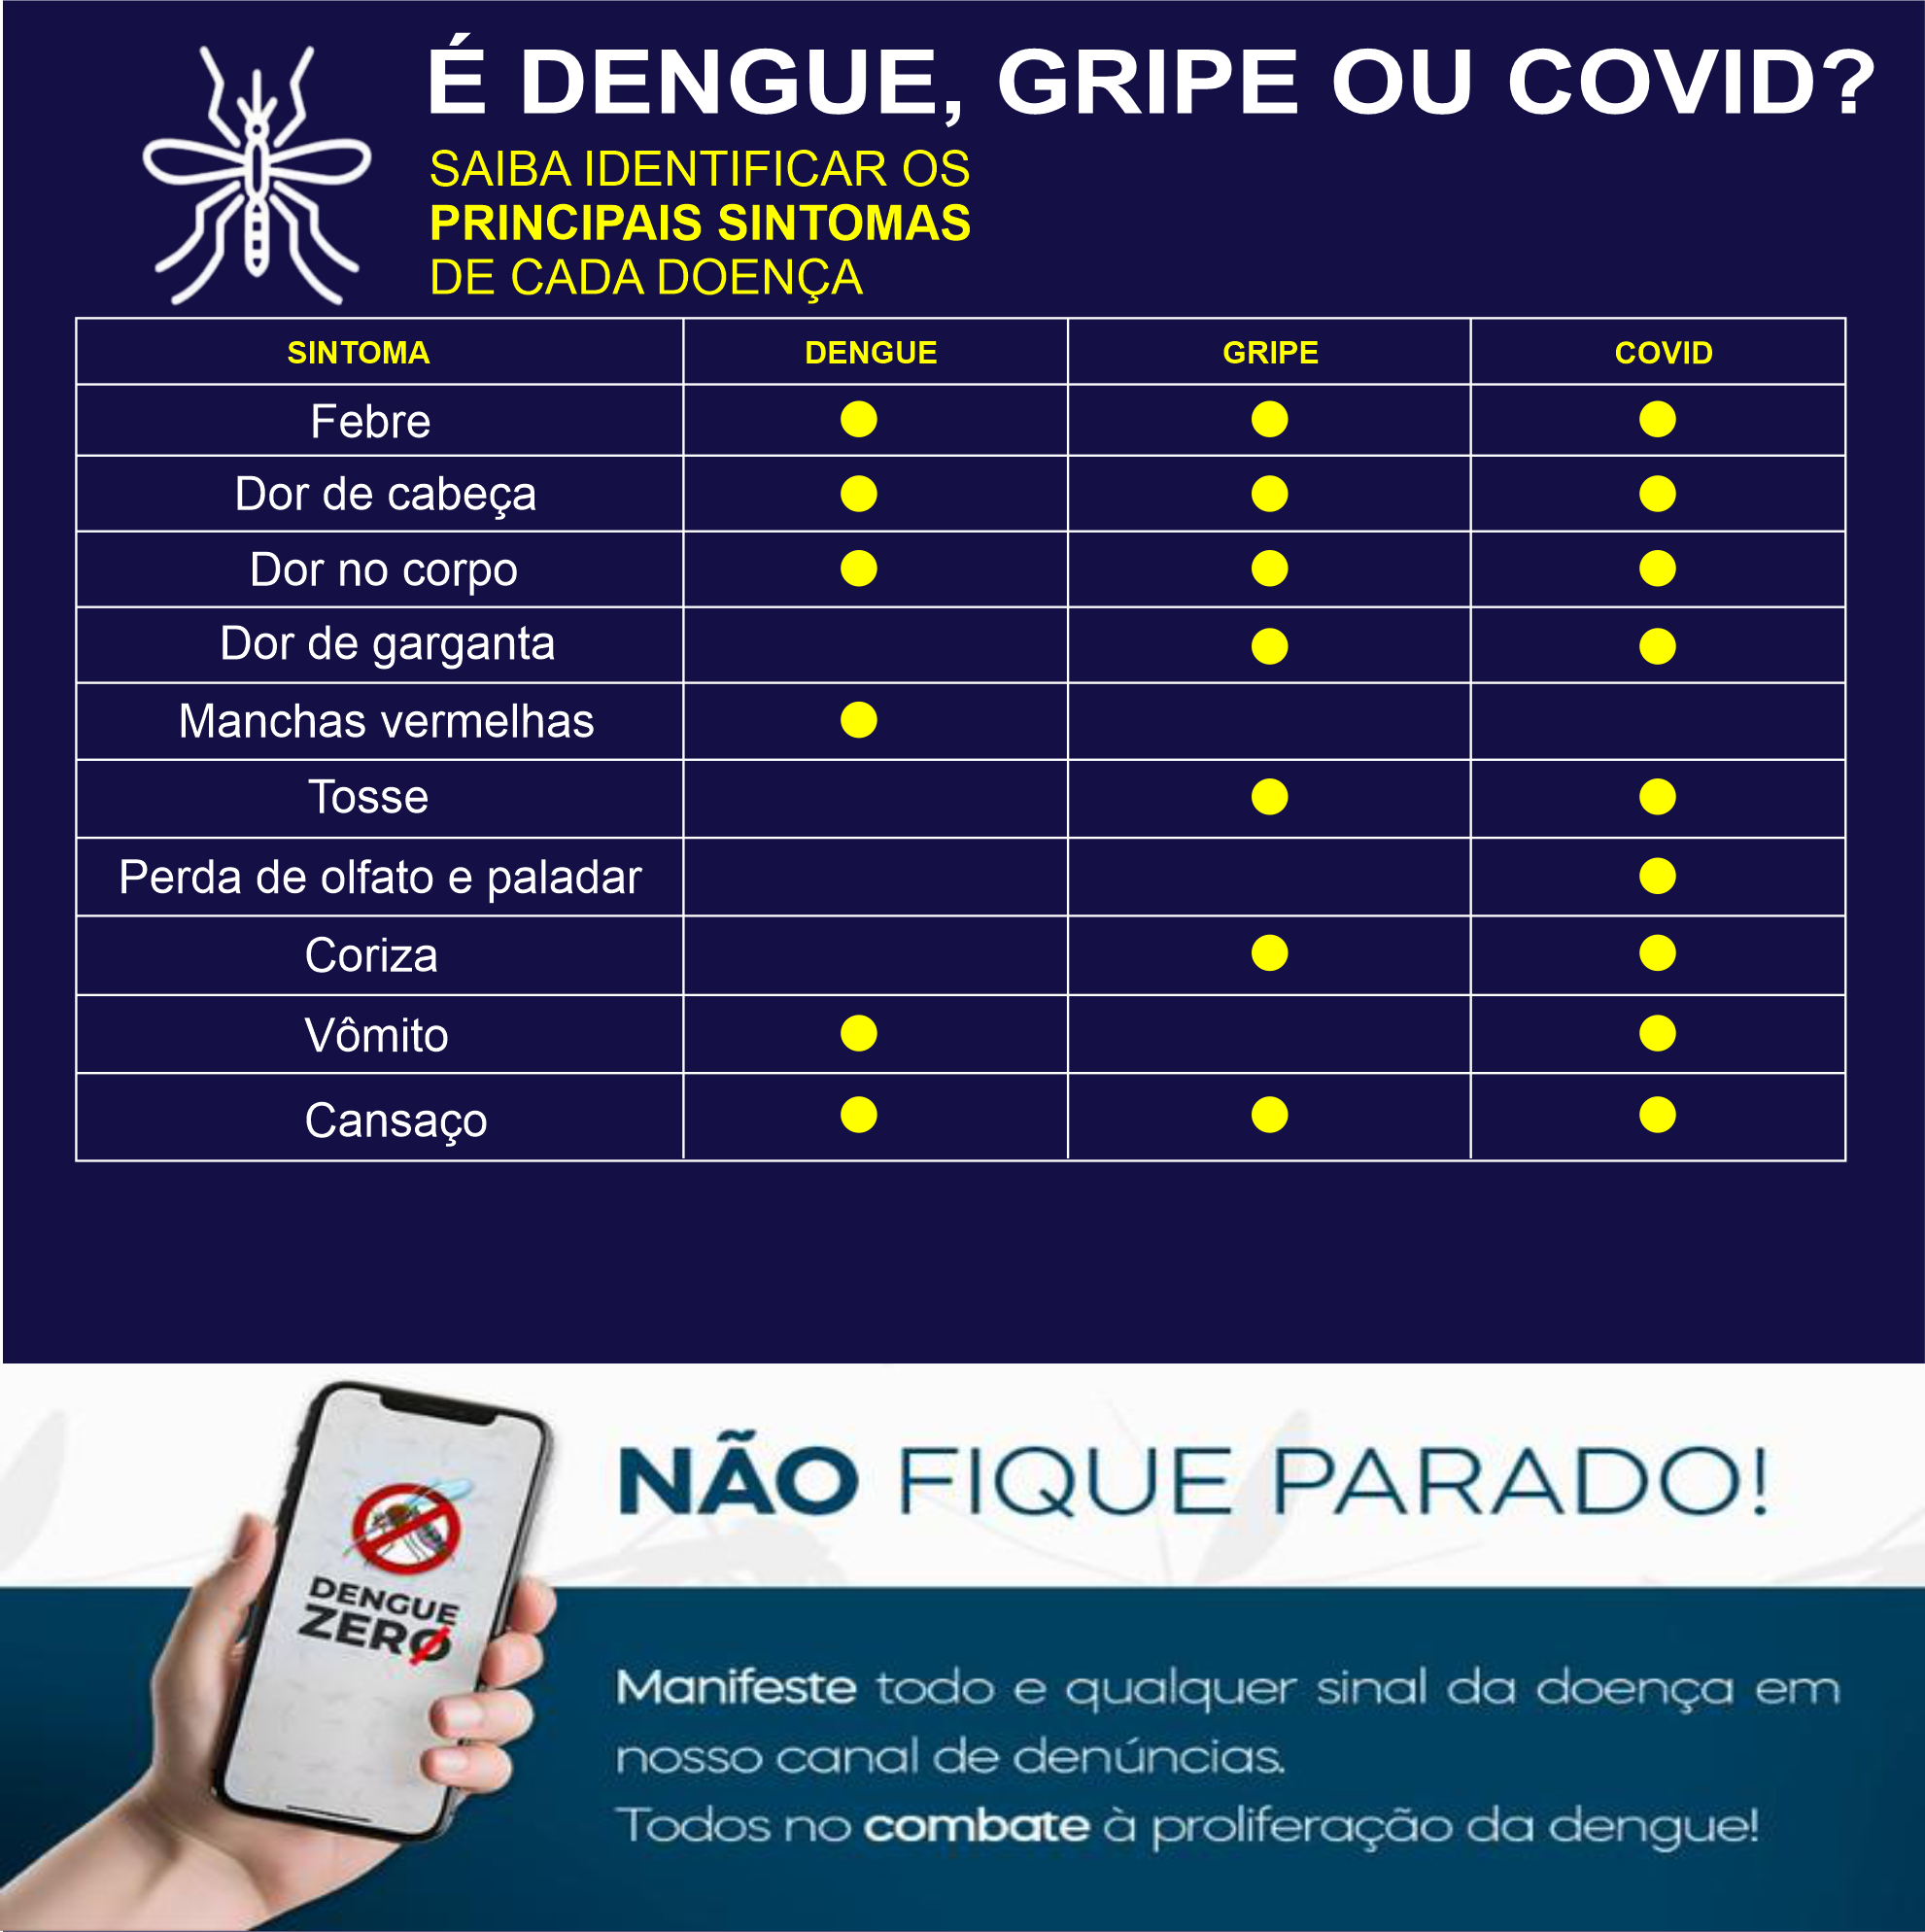 Dengue, Gripe ou Covid?